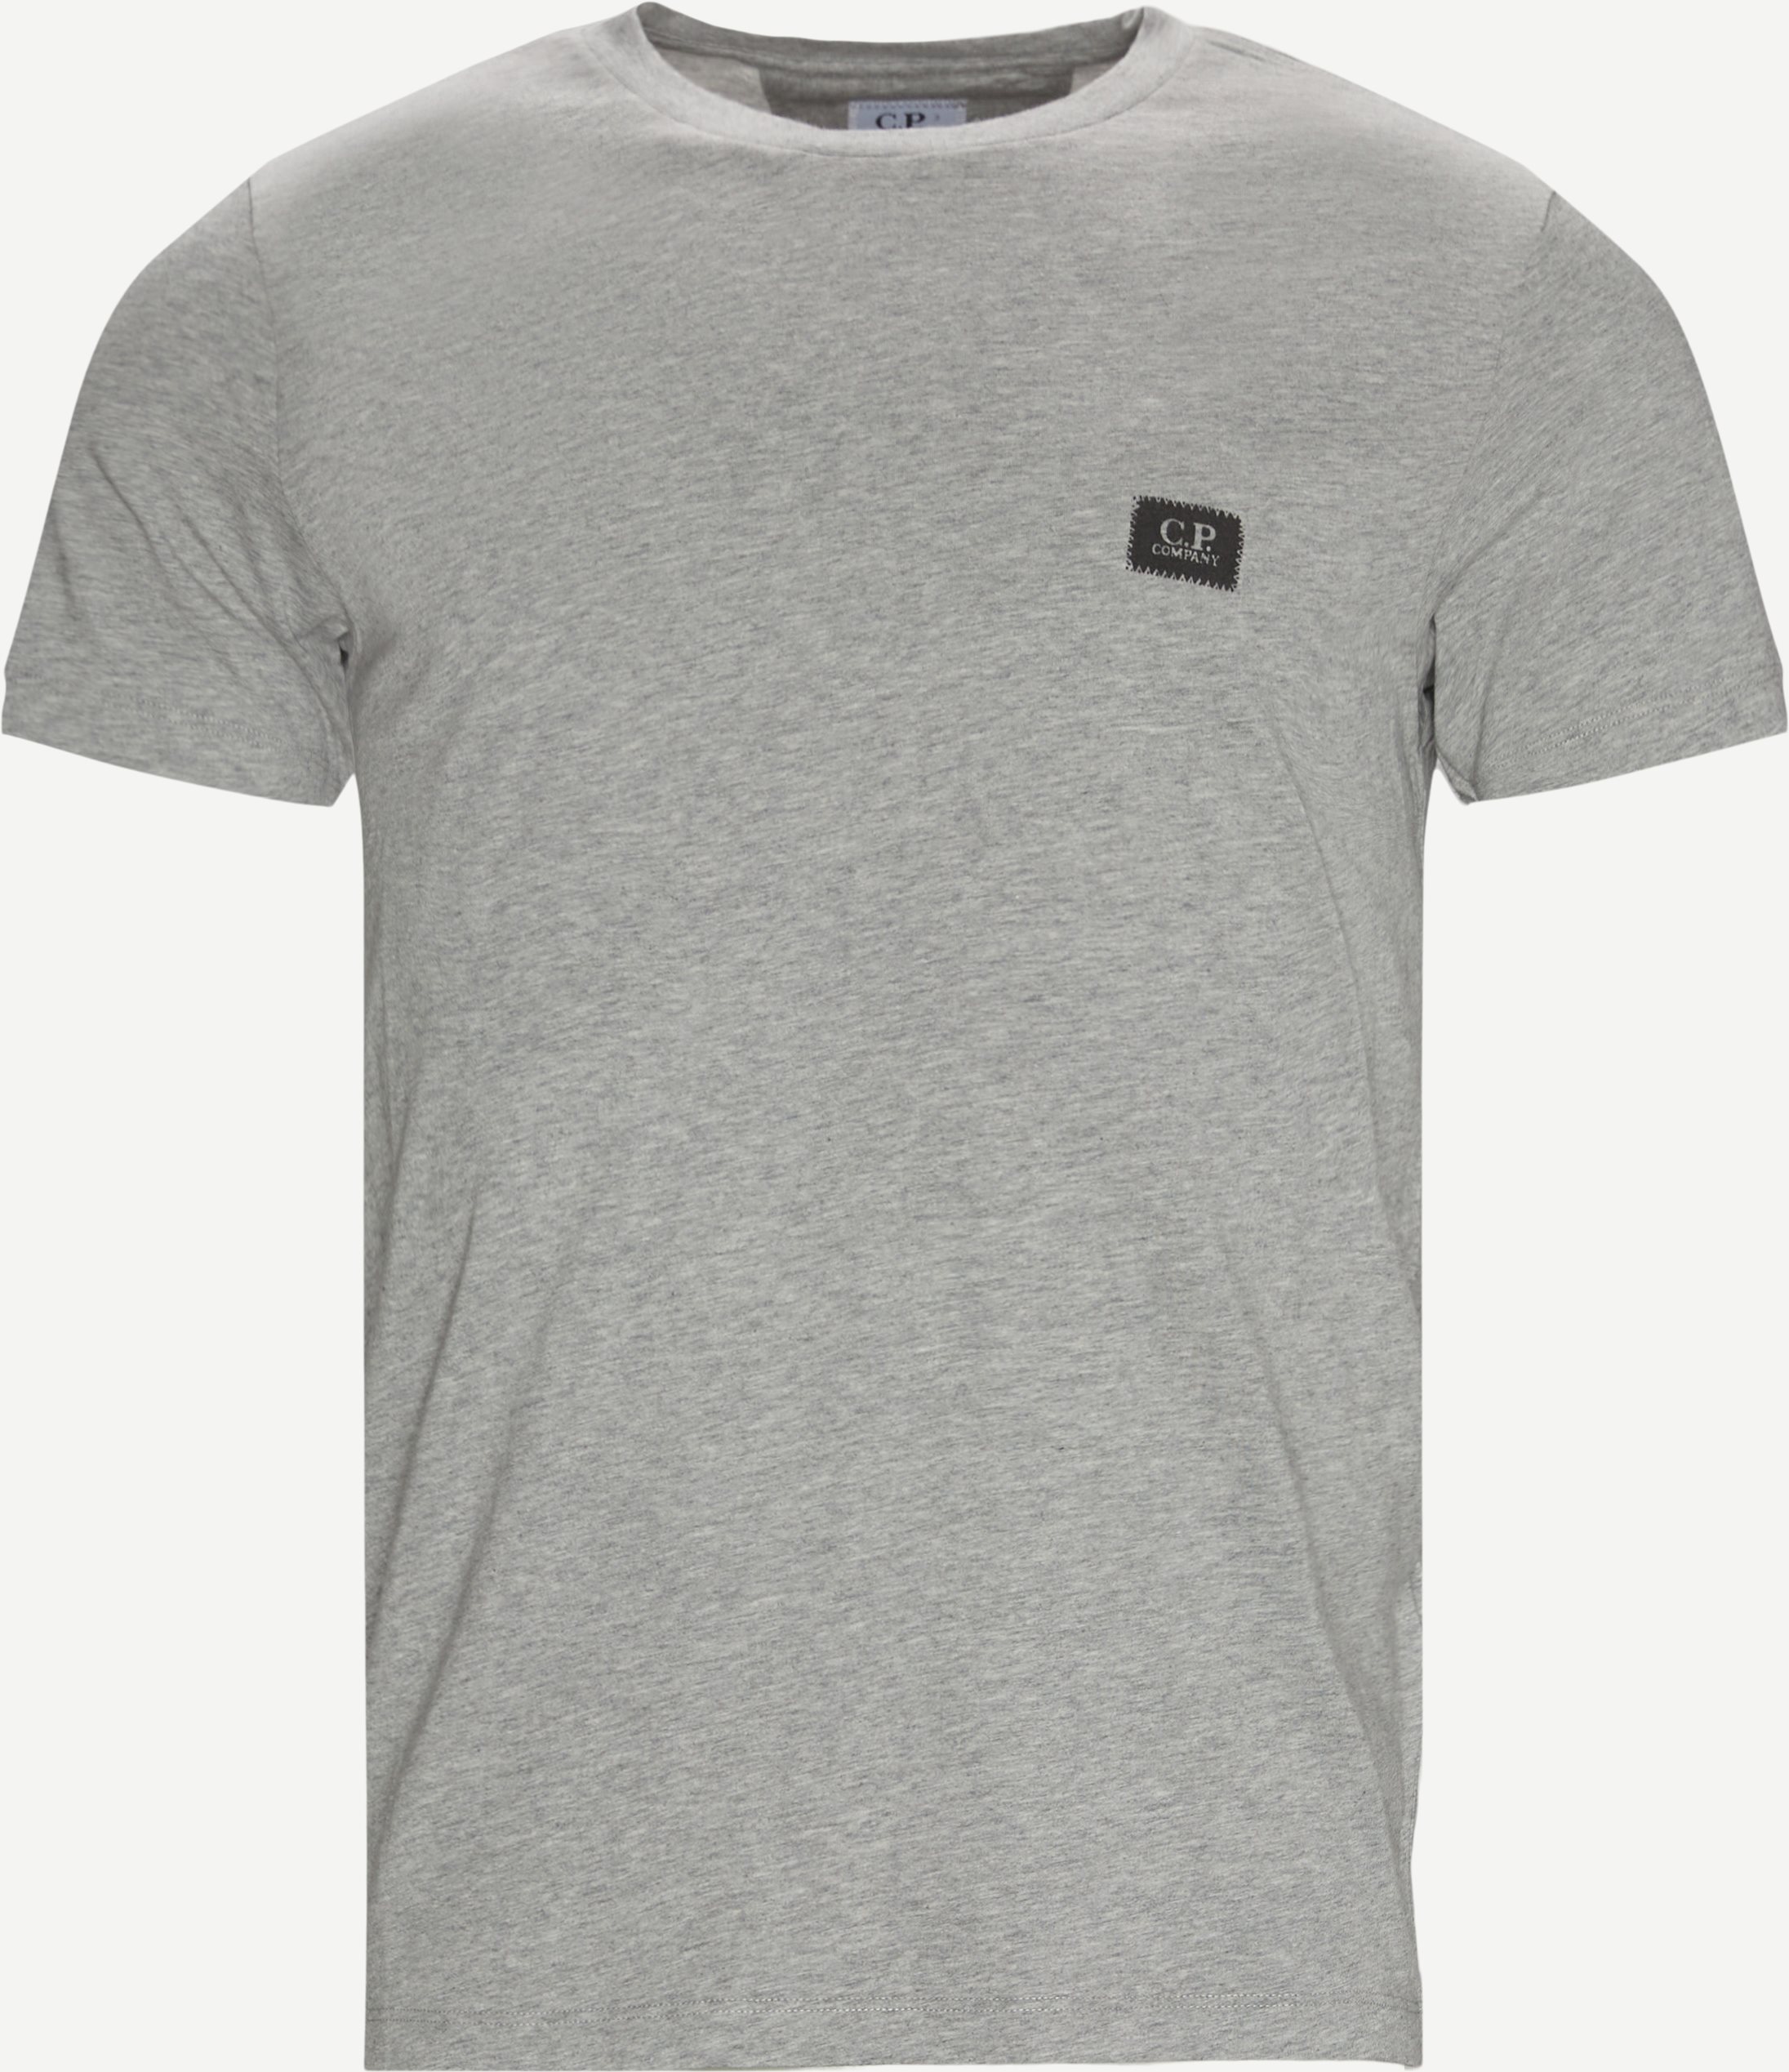 Jersey Tee - T-shirts - Regular fit - Grey